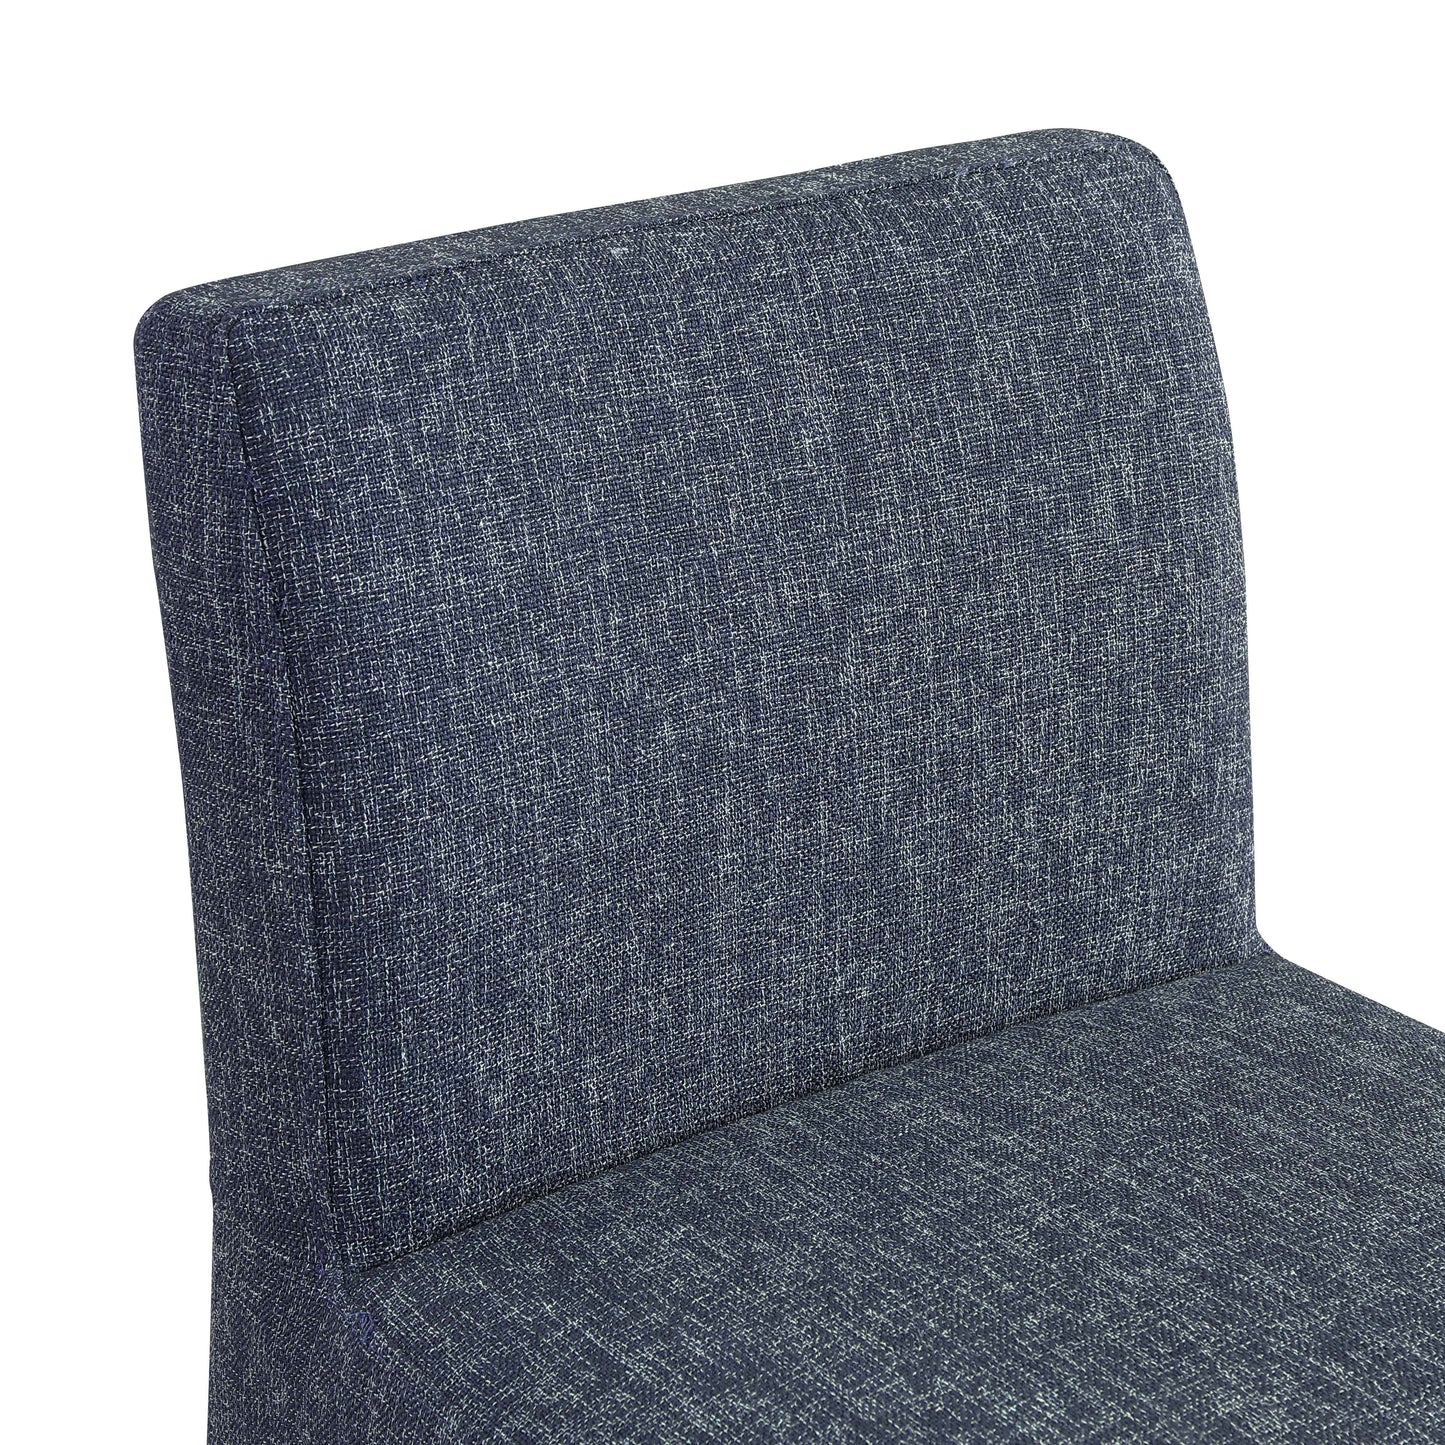 galaxy blue linen textured fabric stool c